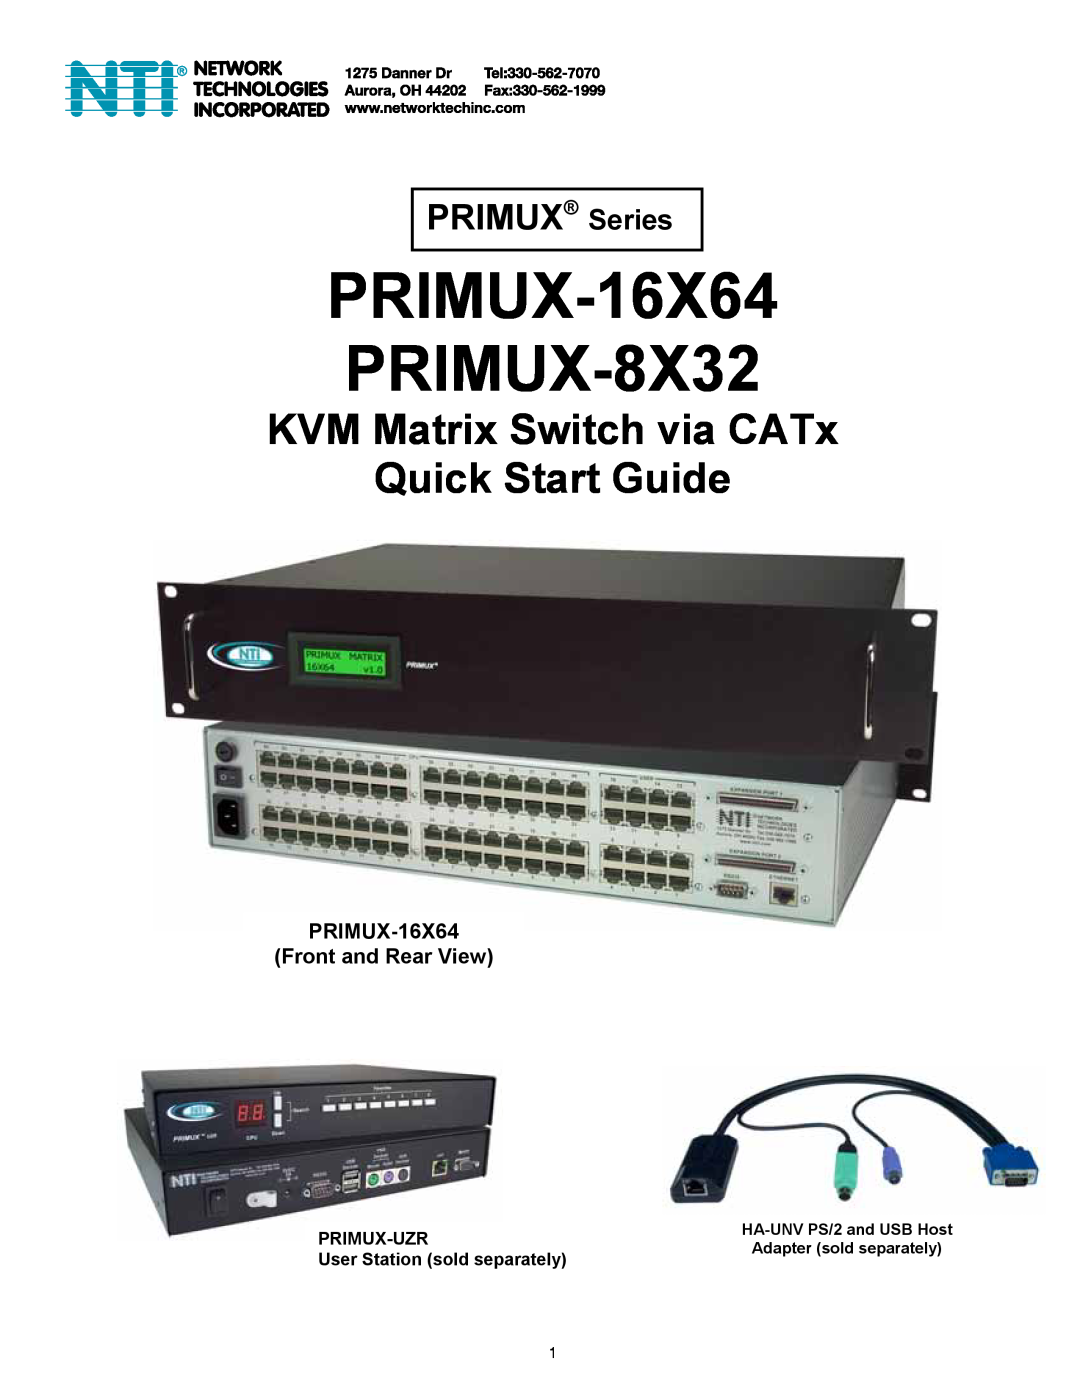 Network Technologies Primus-16X64 quick start PRIMUX-16X64 Front and Rear View, PRIMUX-16X64 PRIMUX-8X32, PRIMUX Series 